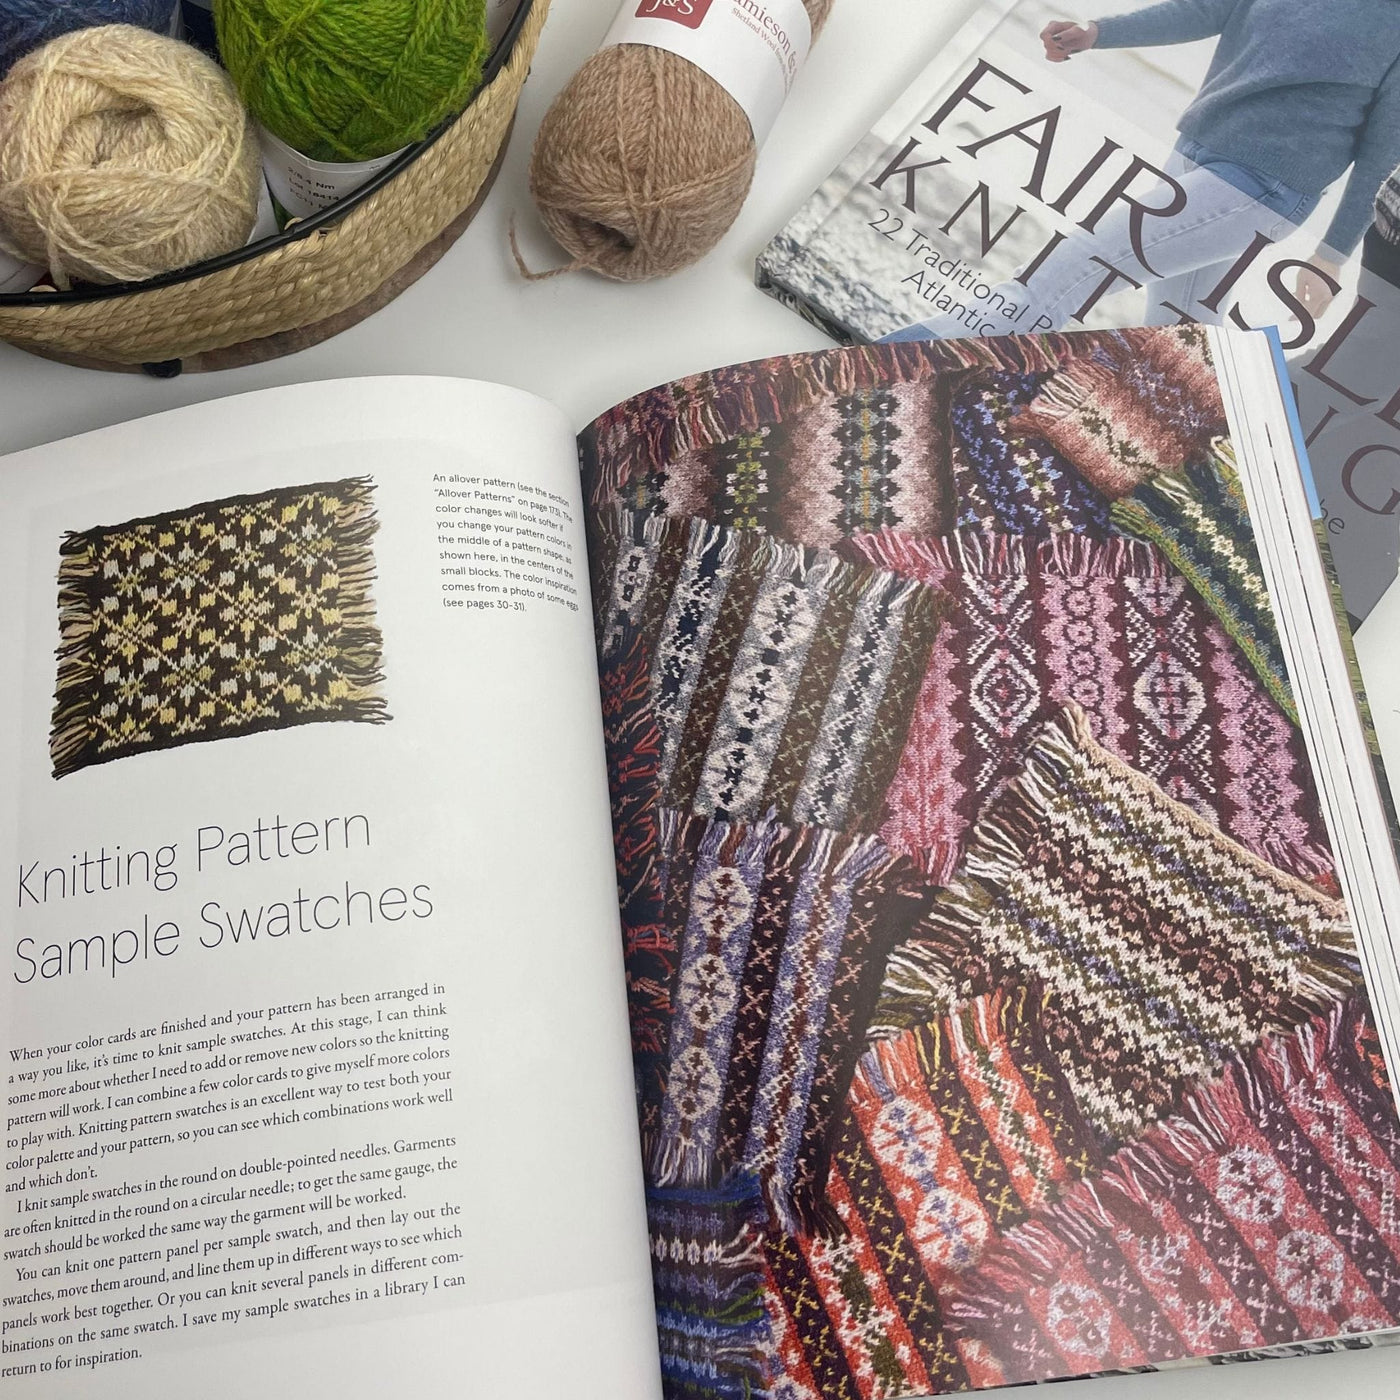 Fair Isle Knitting by Carina Olsson